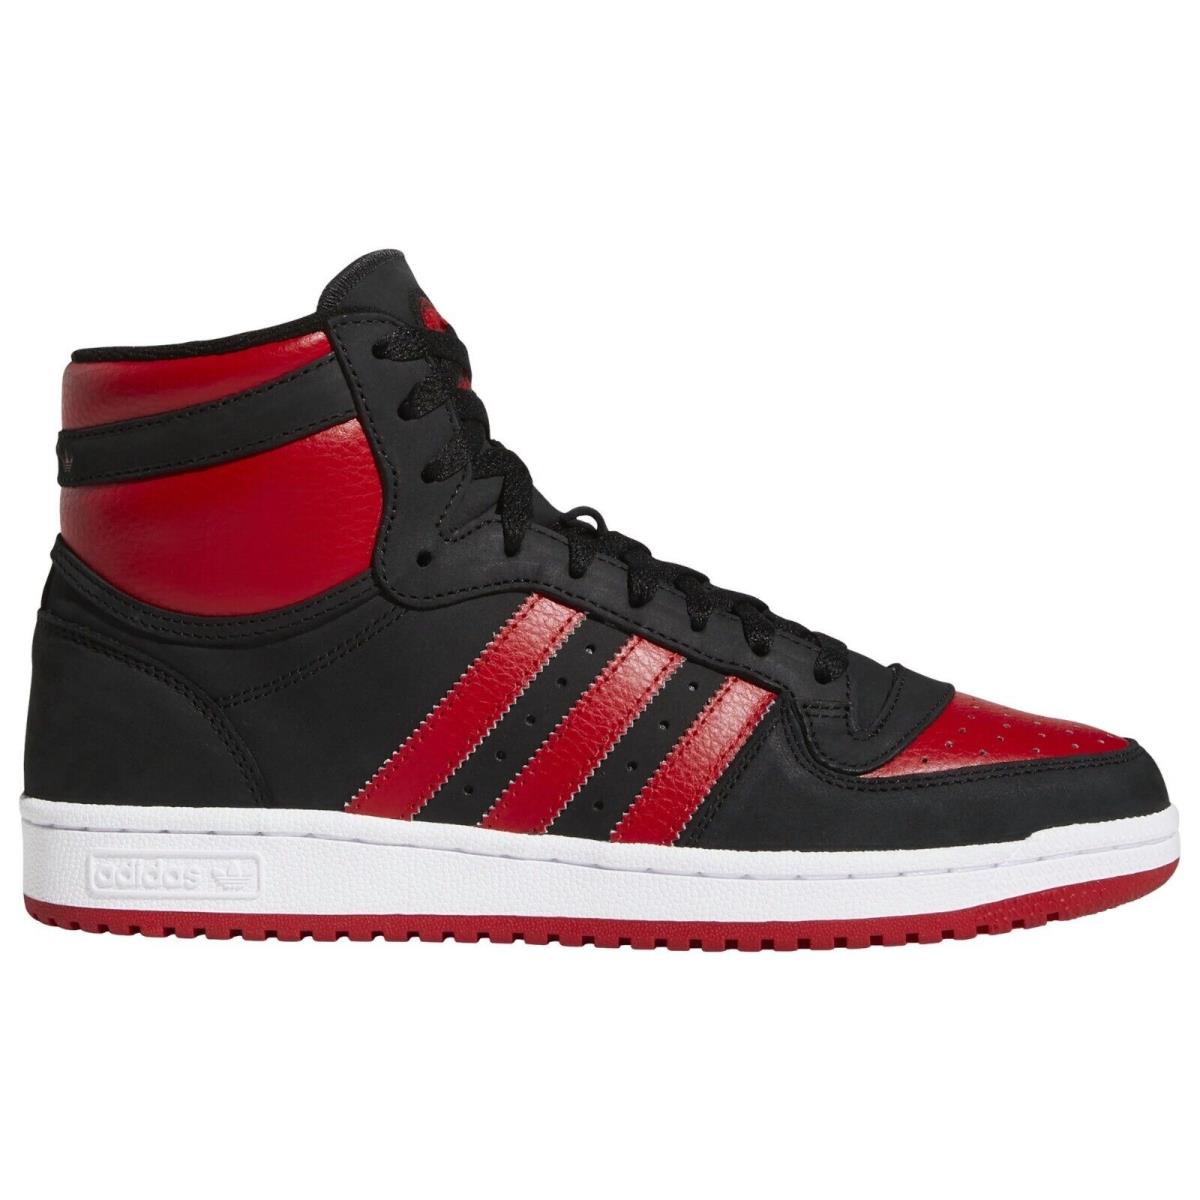 Adidas Originals Top Ten RB Men`s Sneakers Comfort Casual Shoes High Top Black - Black, Manufacturer: Black/Red